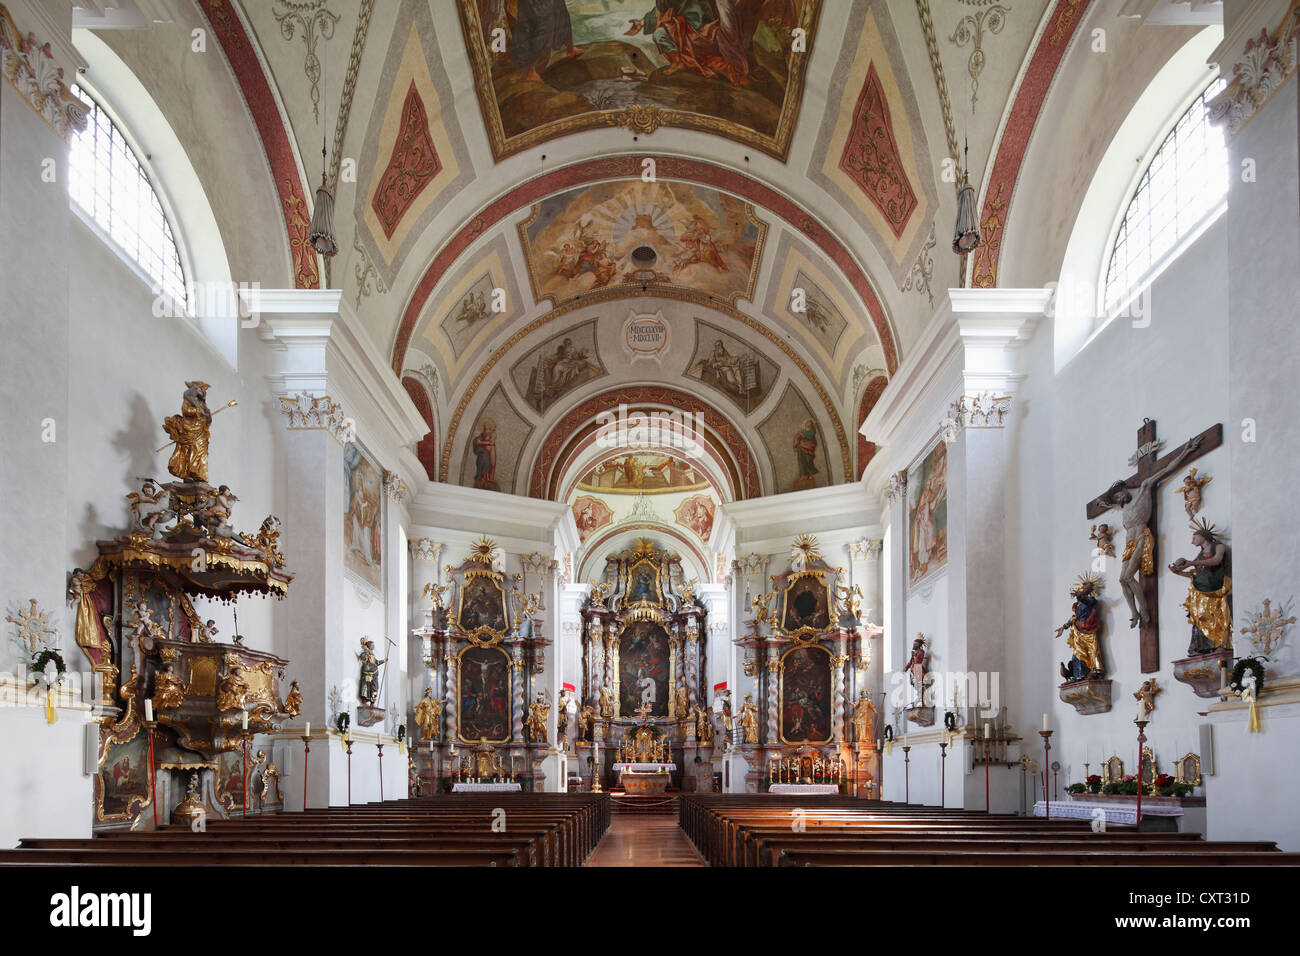 Parish Church of St. Georg, Ruhpolding, Chiemgau region, Upper Bavaria, Bavaria, Germany, Europe Stock Photo